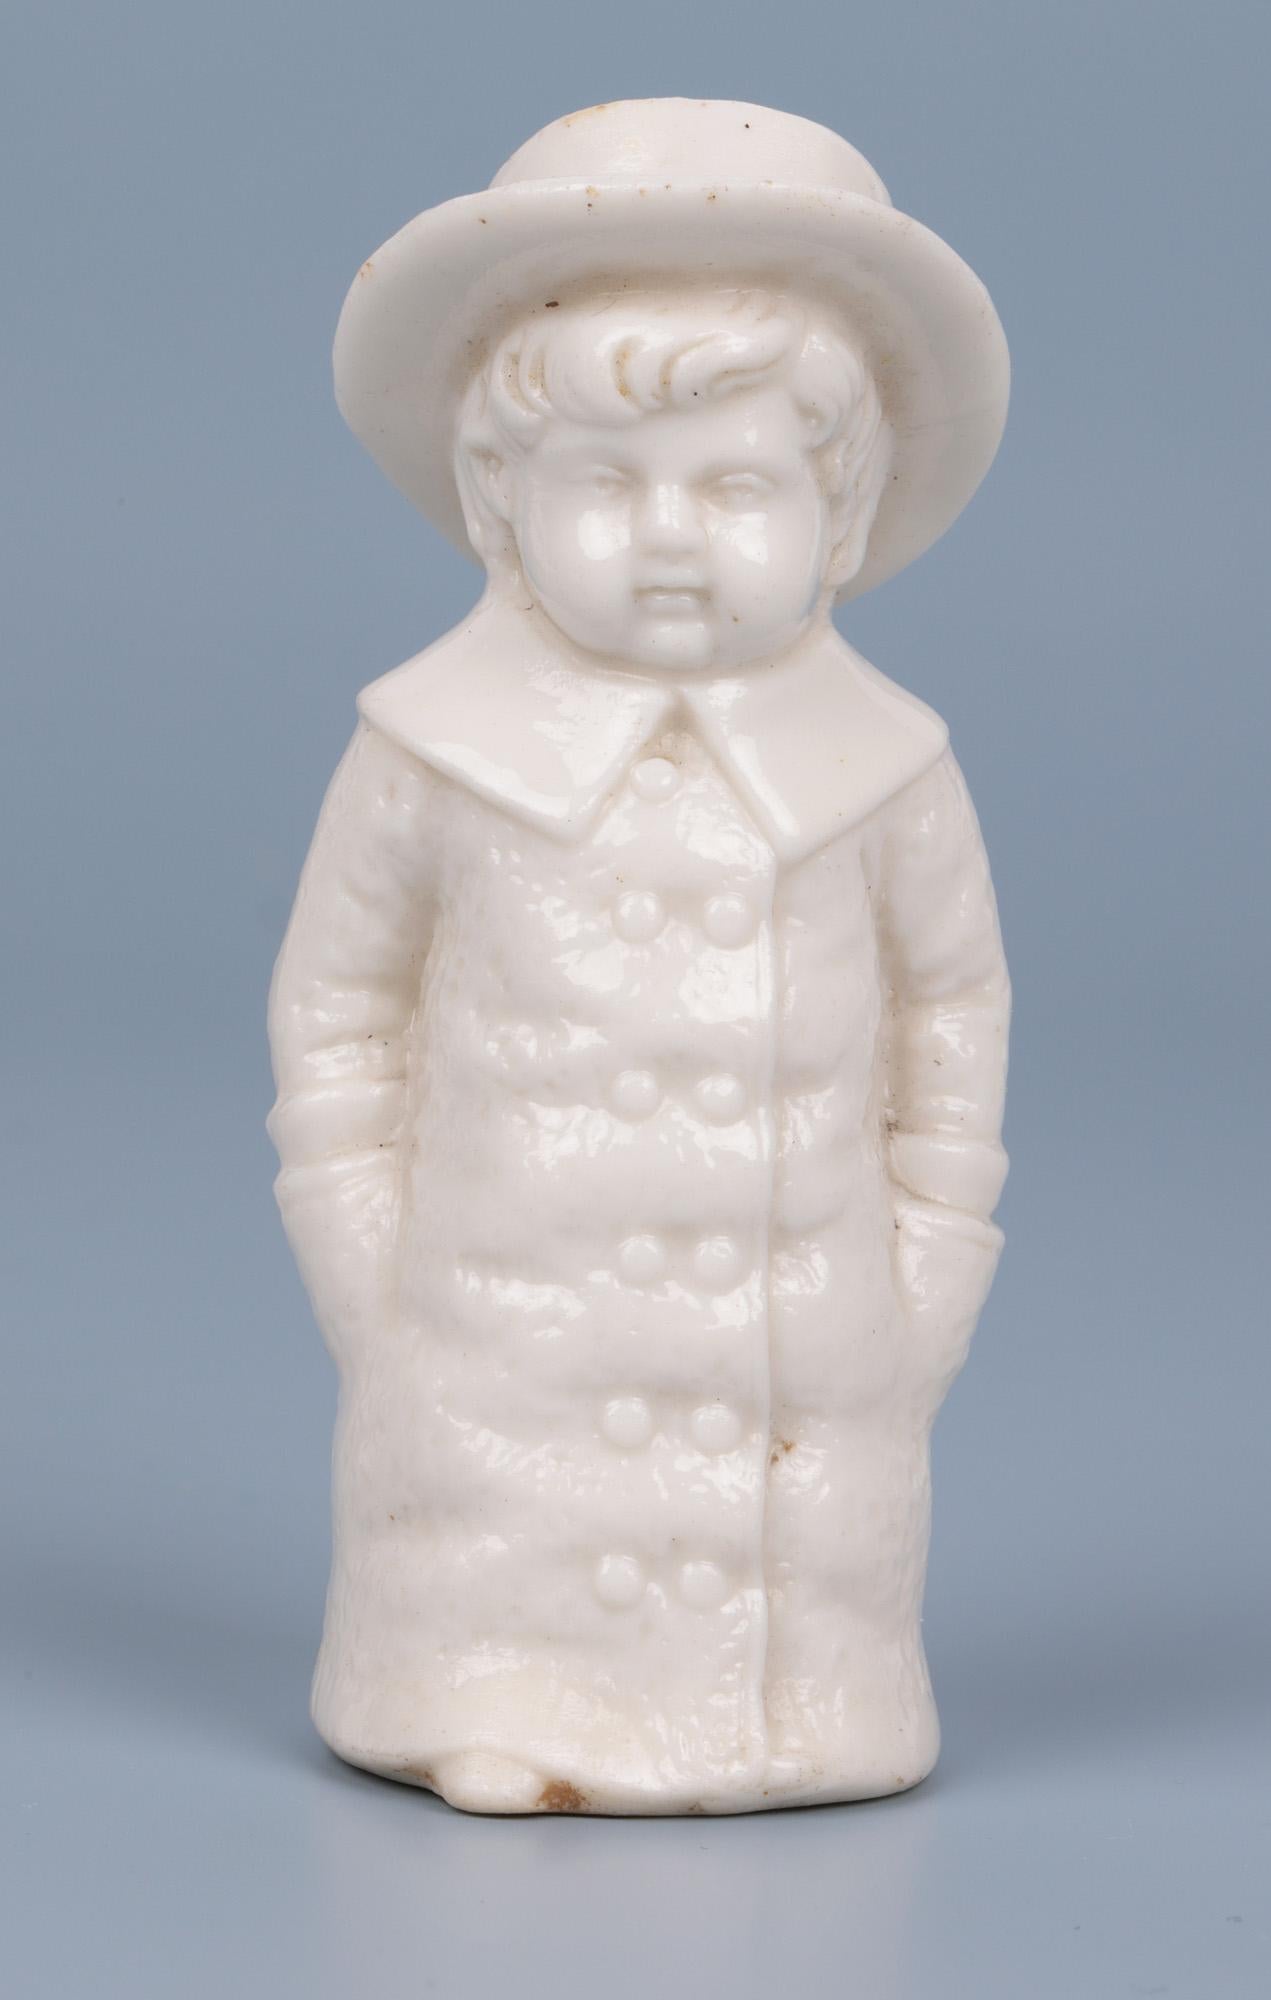 Antique English Porcelain Boy in Hat Pepper or Pounce Pot For Sale 8